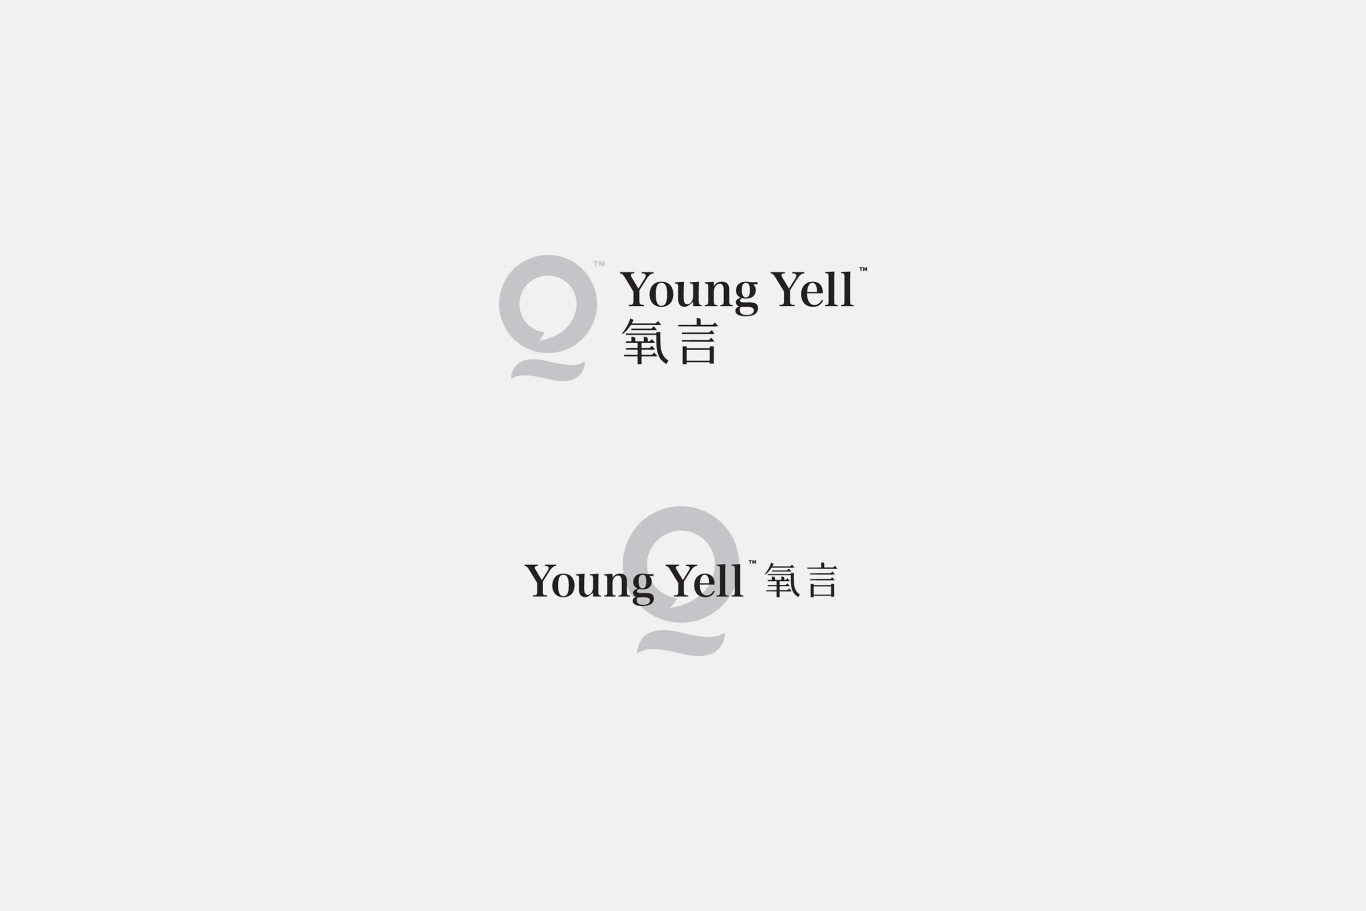 氧言品牌VI設計 Young Yell Brand VI Design | 高端內衣服裝行業LOGO設計圖5